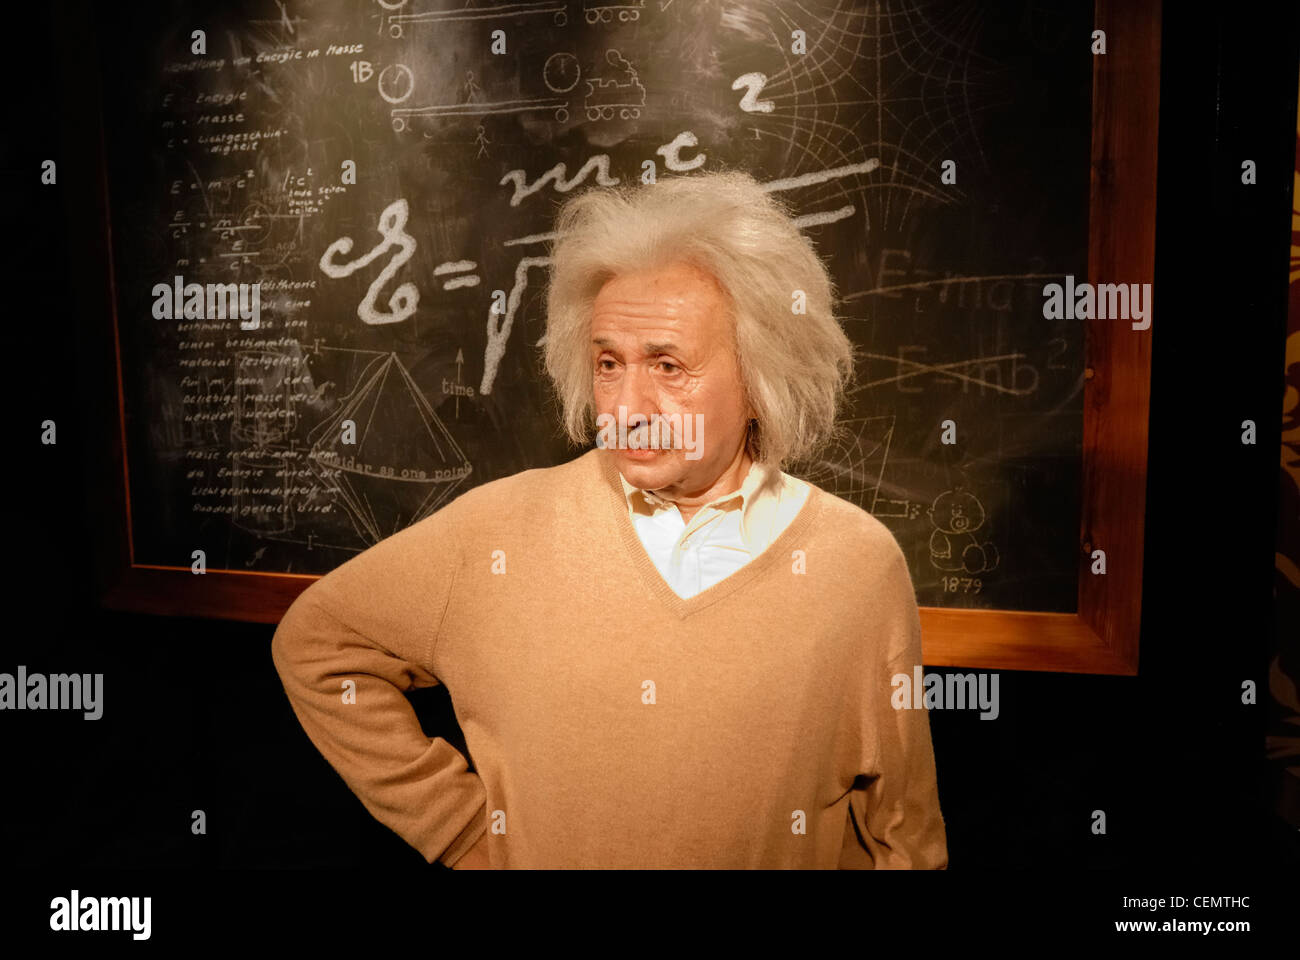 Albert Einstein as a wax figure in Madame Tussauds Wax Museum, Unter den Linden 74, Berlin-Mitte, Berlin, Germany, Europe Stock Photo